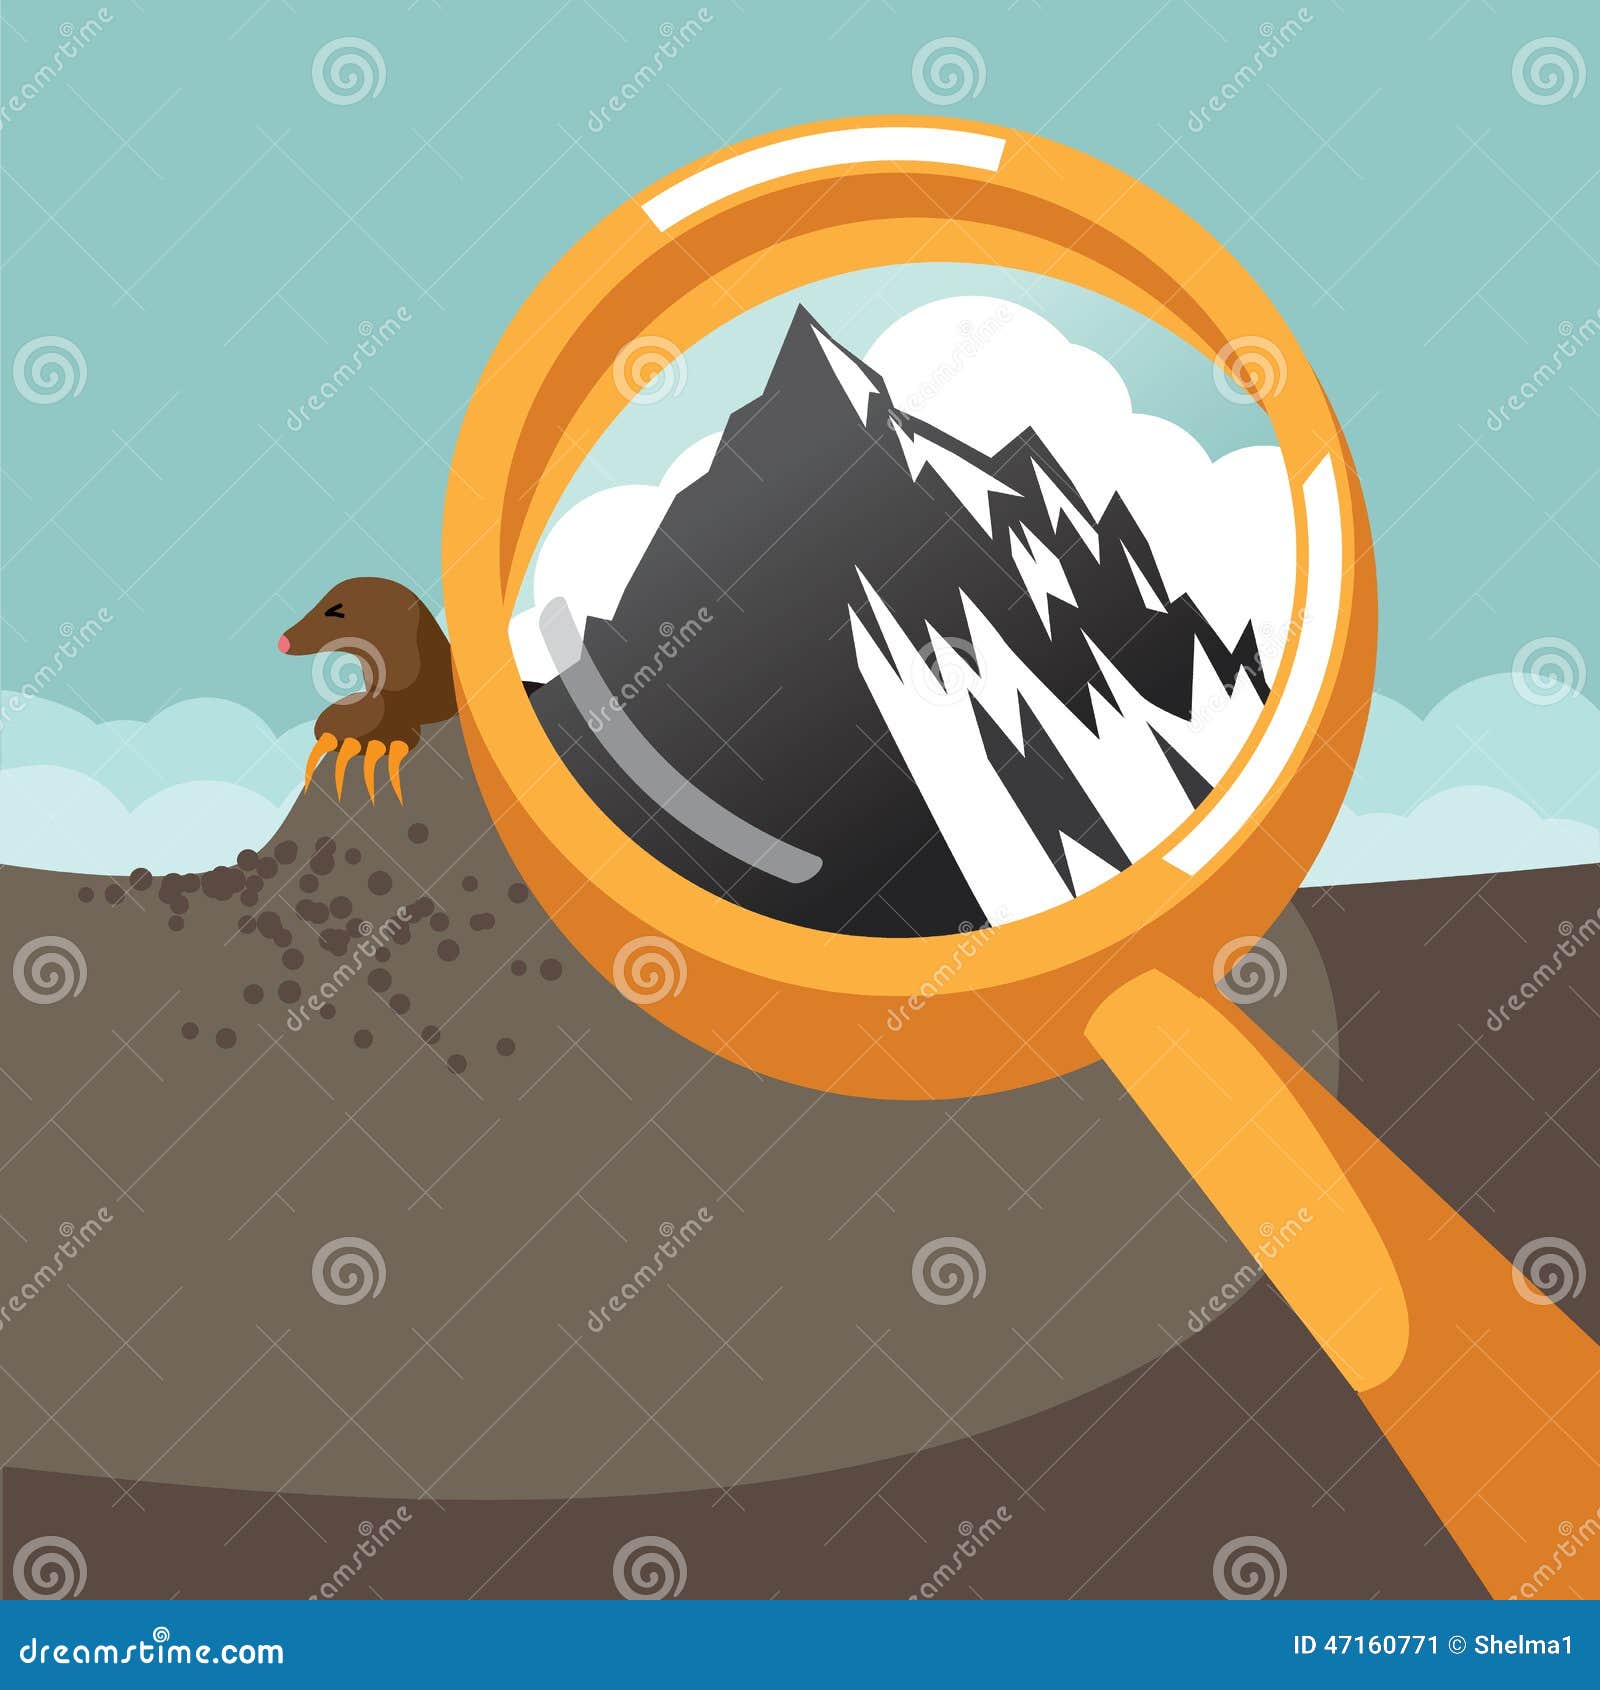 making-mountain-out-molehill-eps-vector-illustration-47160771.jpg